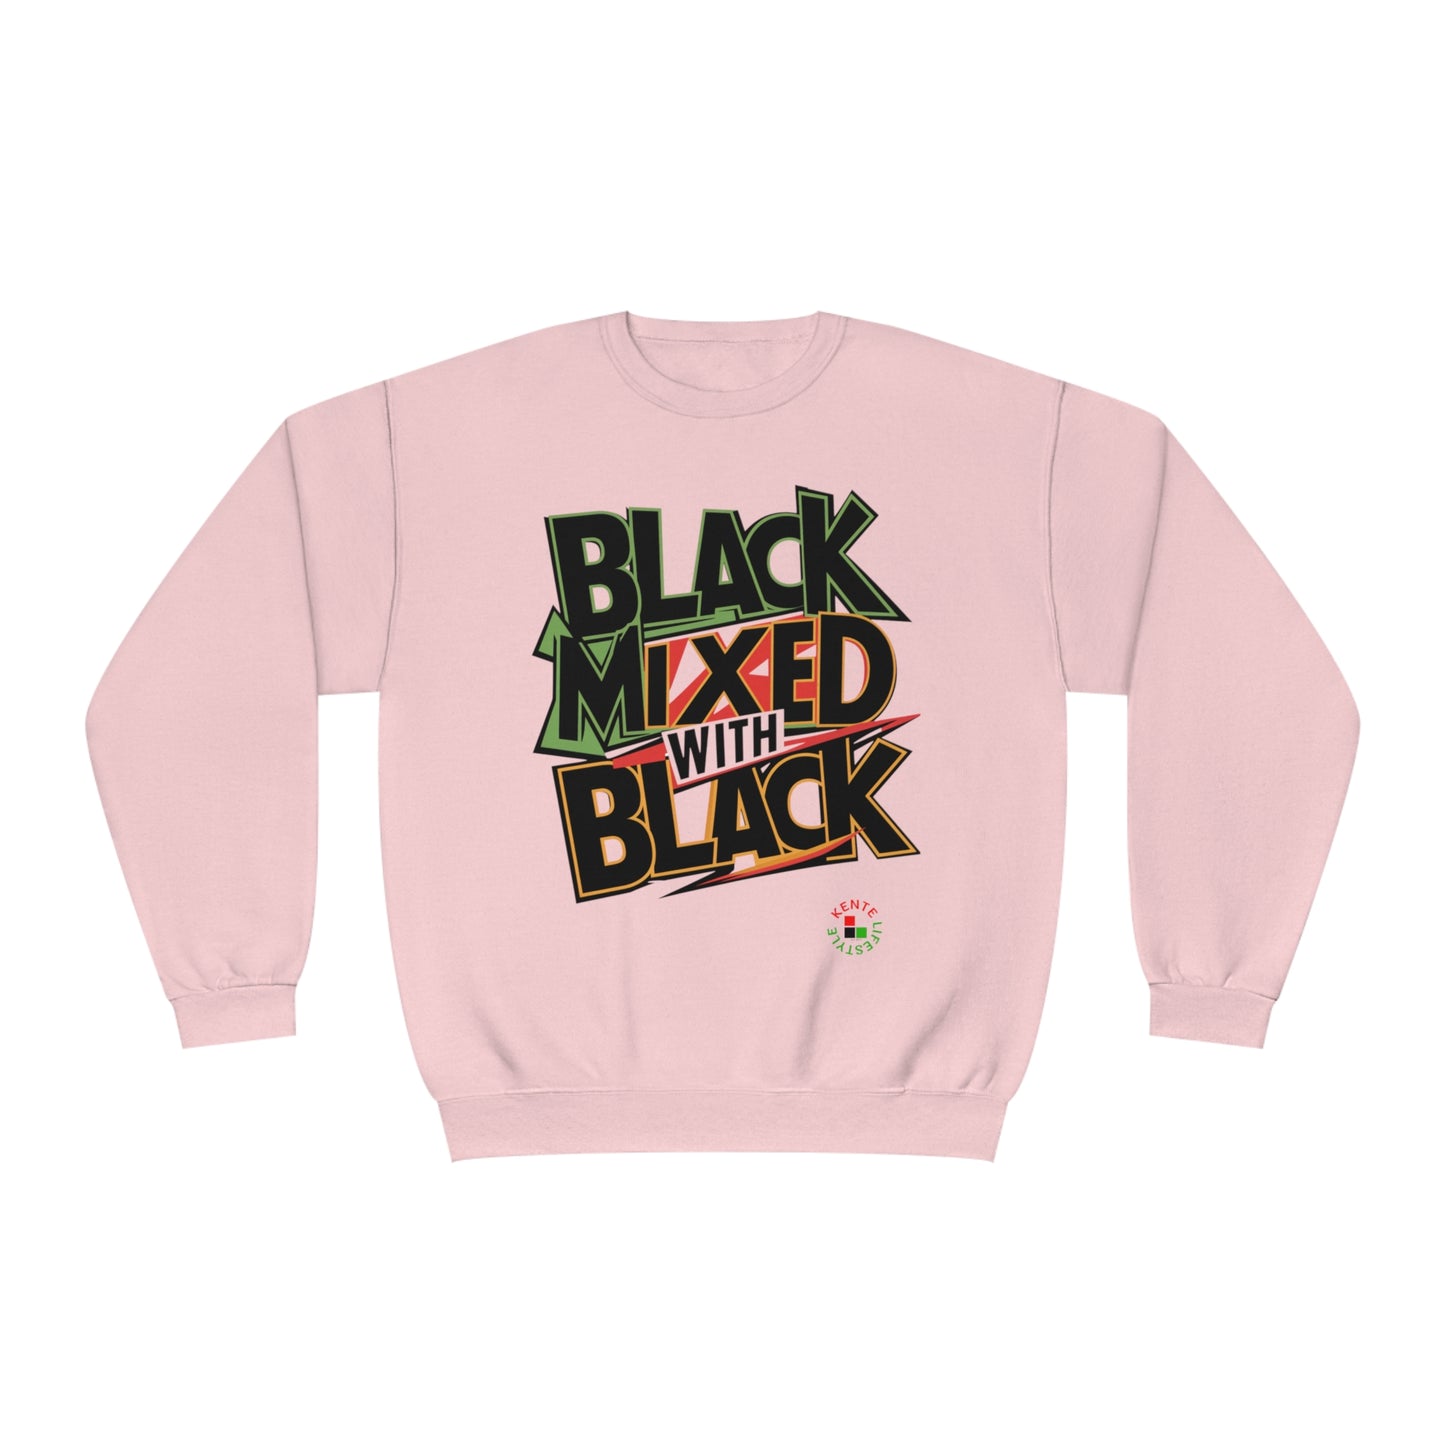 "Black Mixed with Black"  - Sweatshirt